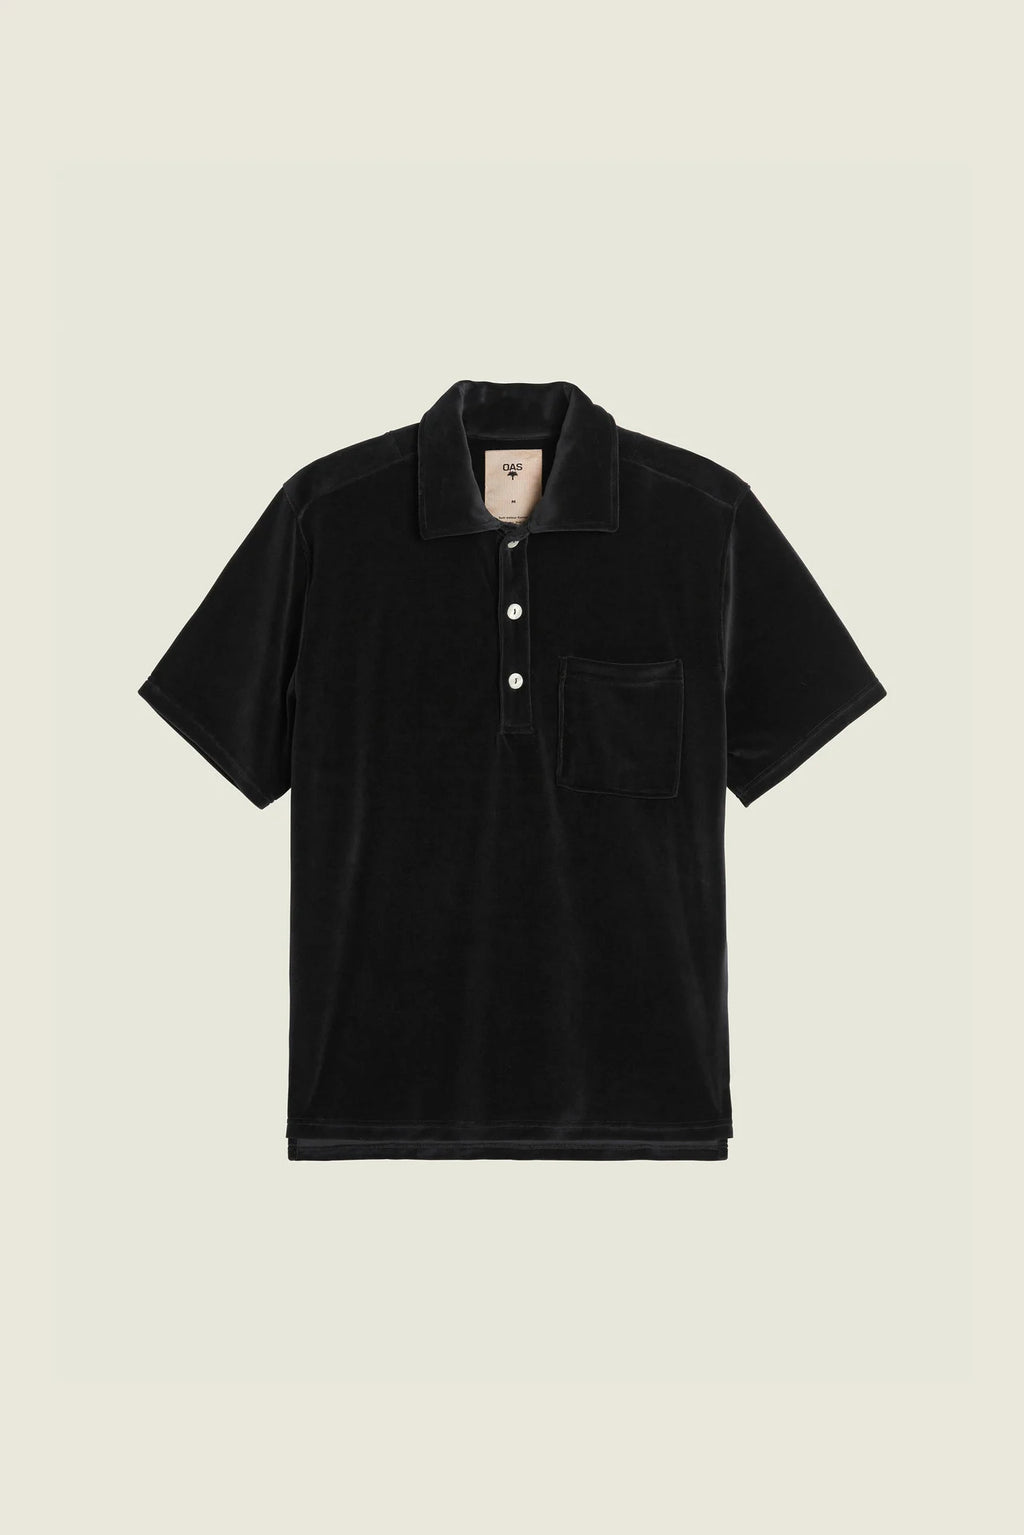 Oas Nearly Black Girona Velour Shirt